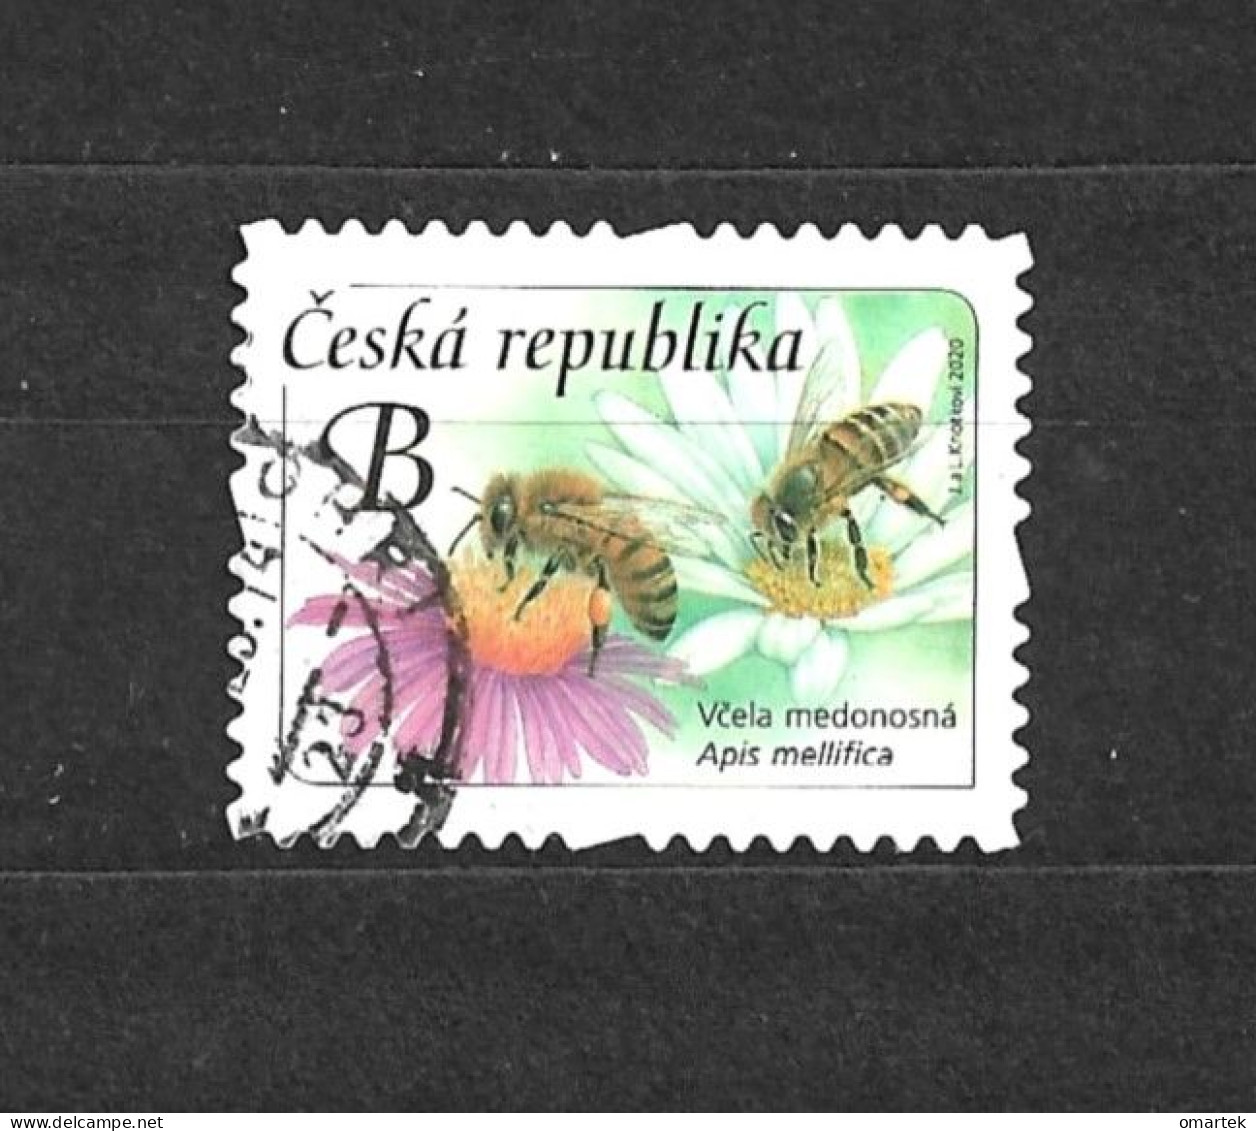 Czech Republic 2020 ⊙ Mi 1067 Sc 3824 Yt 943 Honey Bee. Tschechische Republik. C13 - Gebruikt